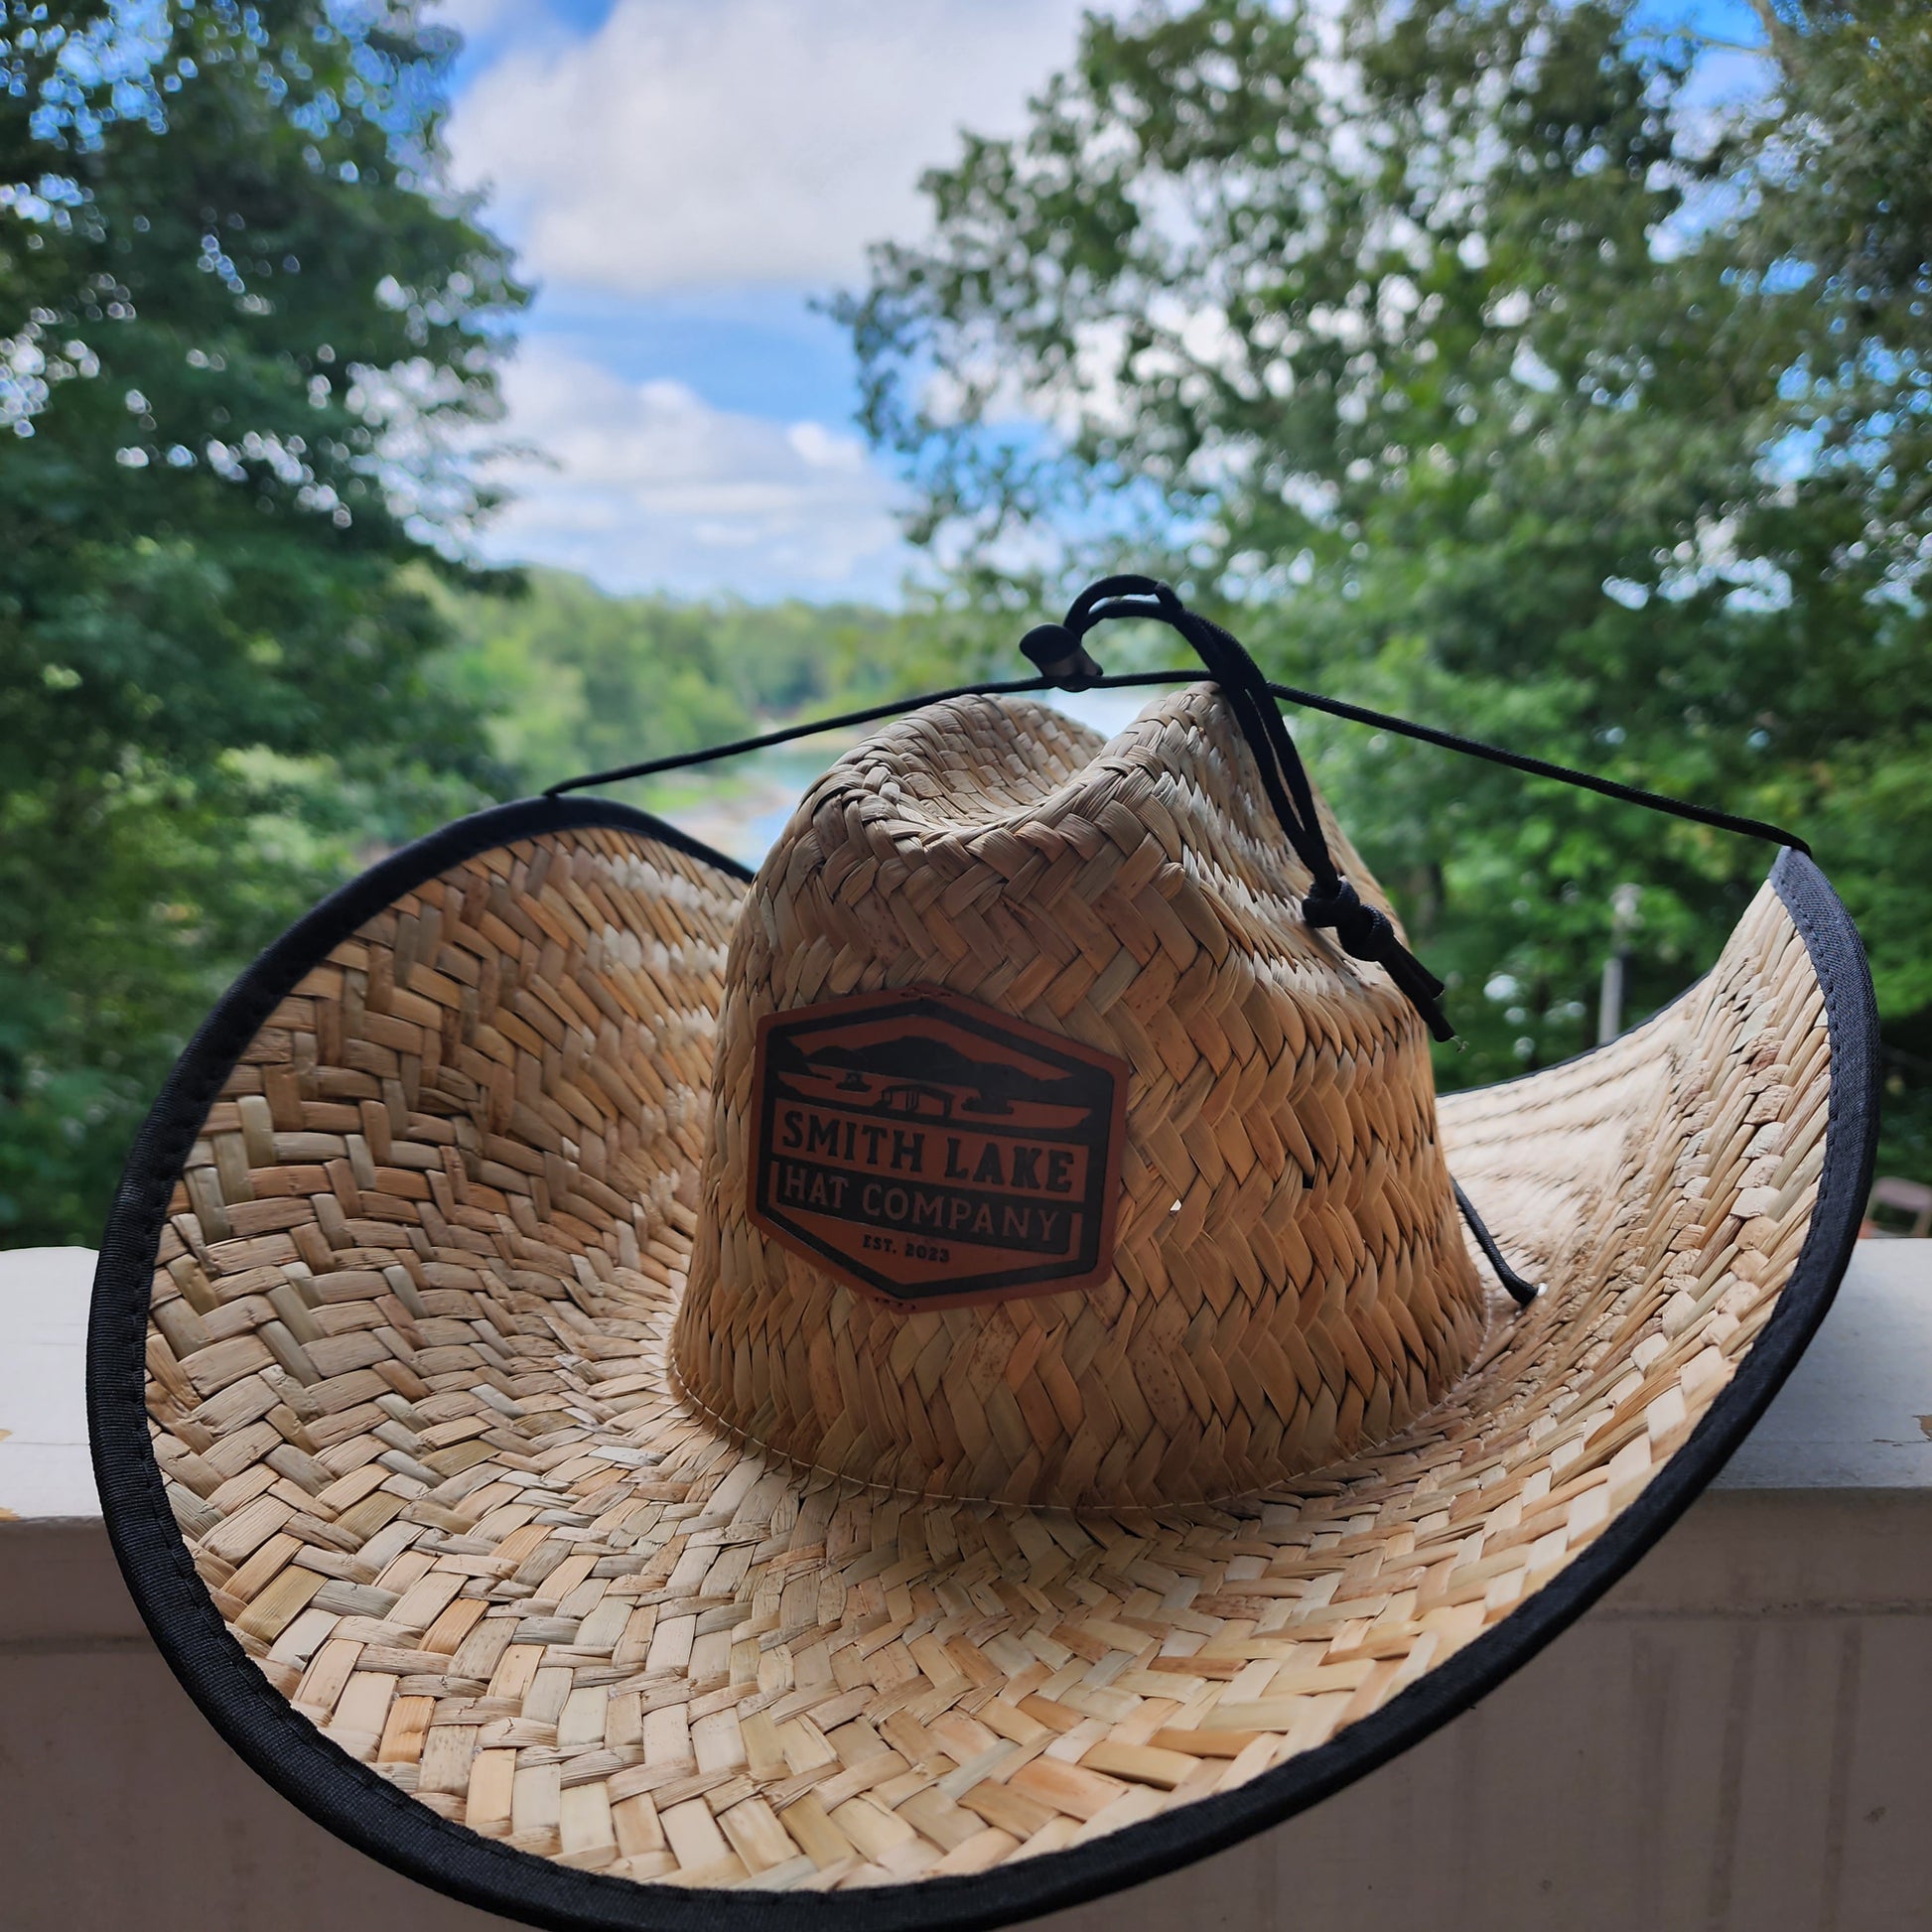 Sun Shade Lake – Smith Lake Hat Company